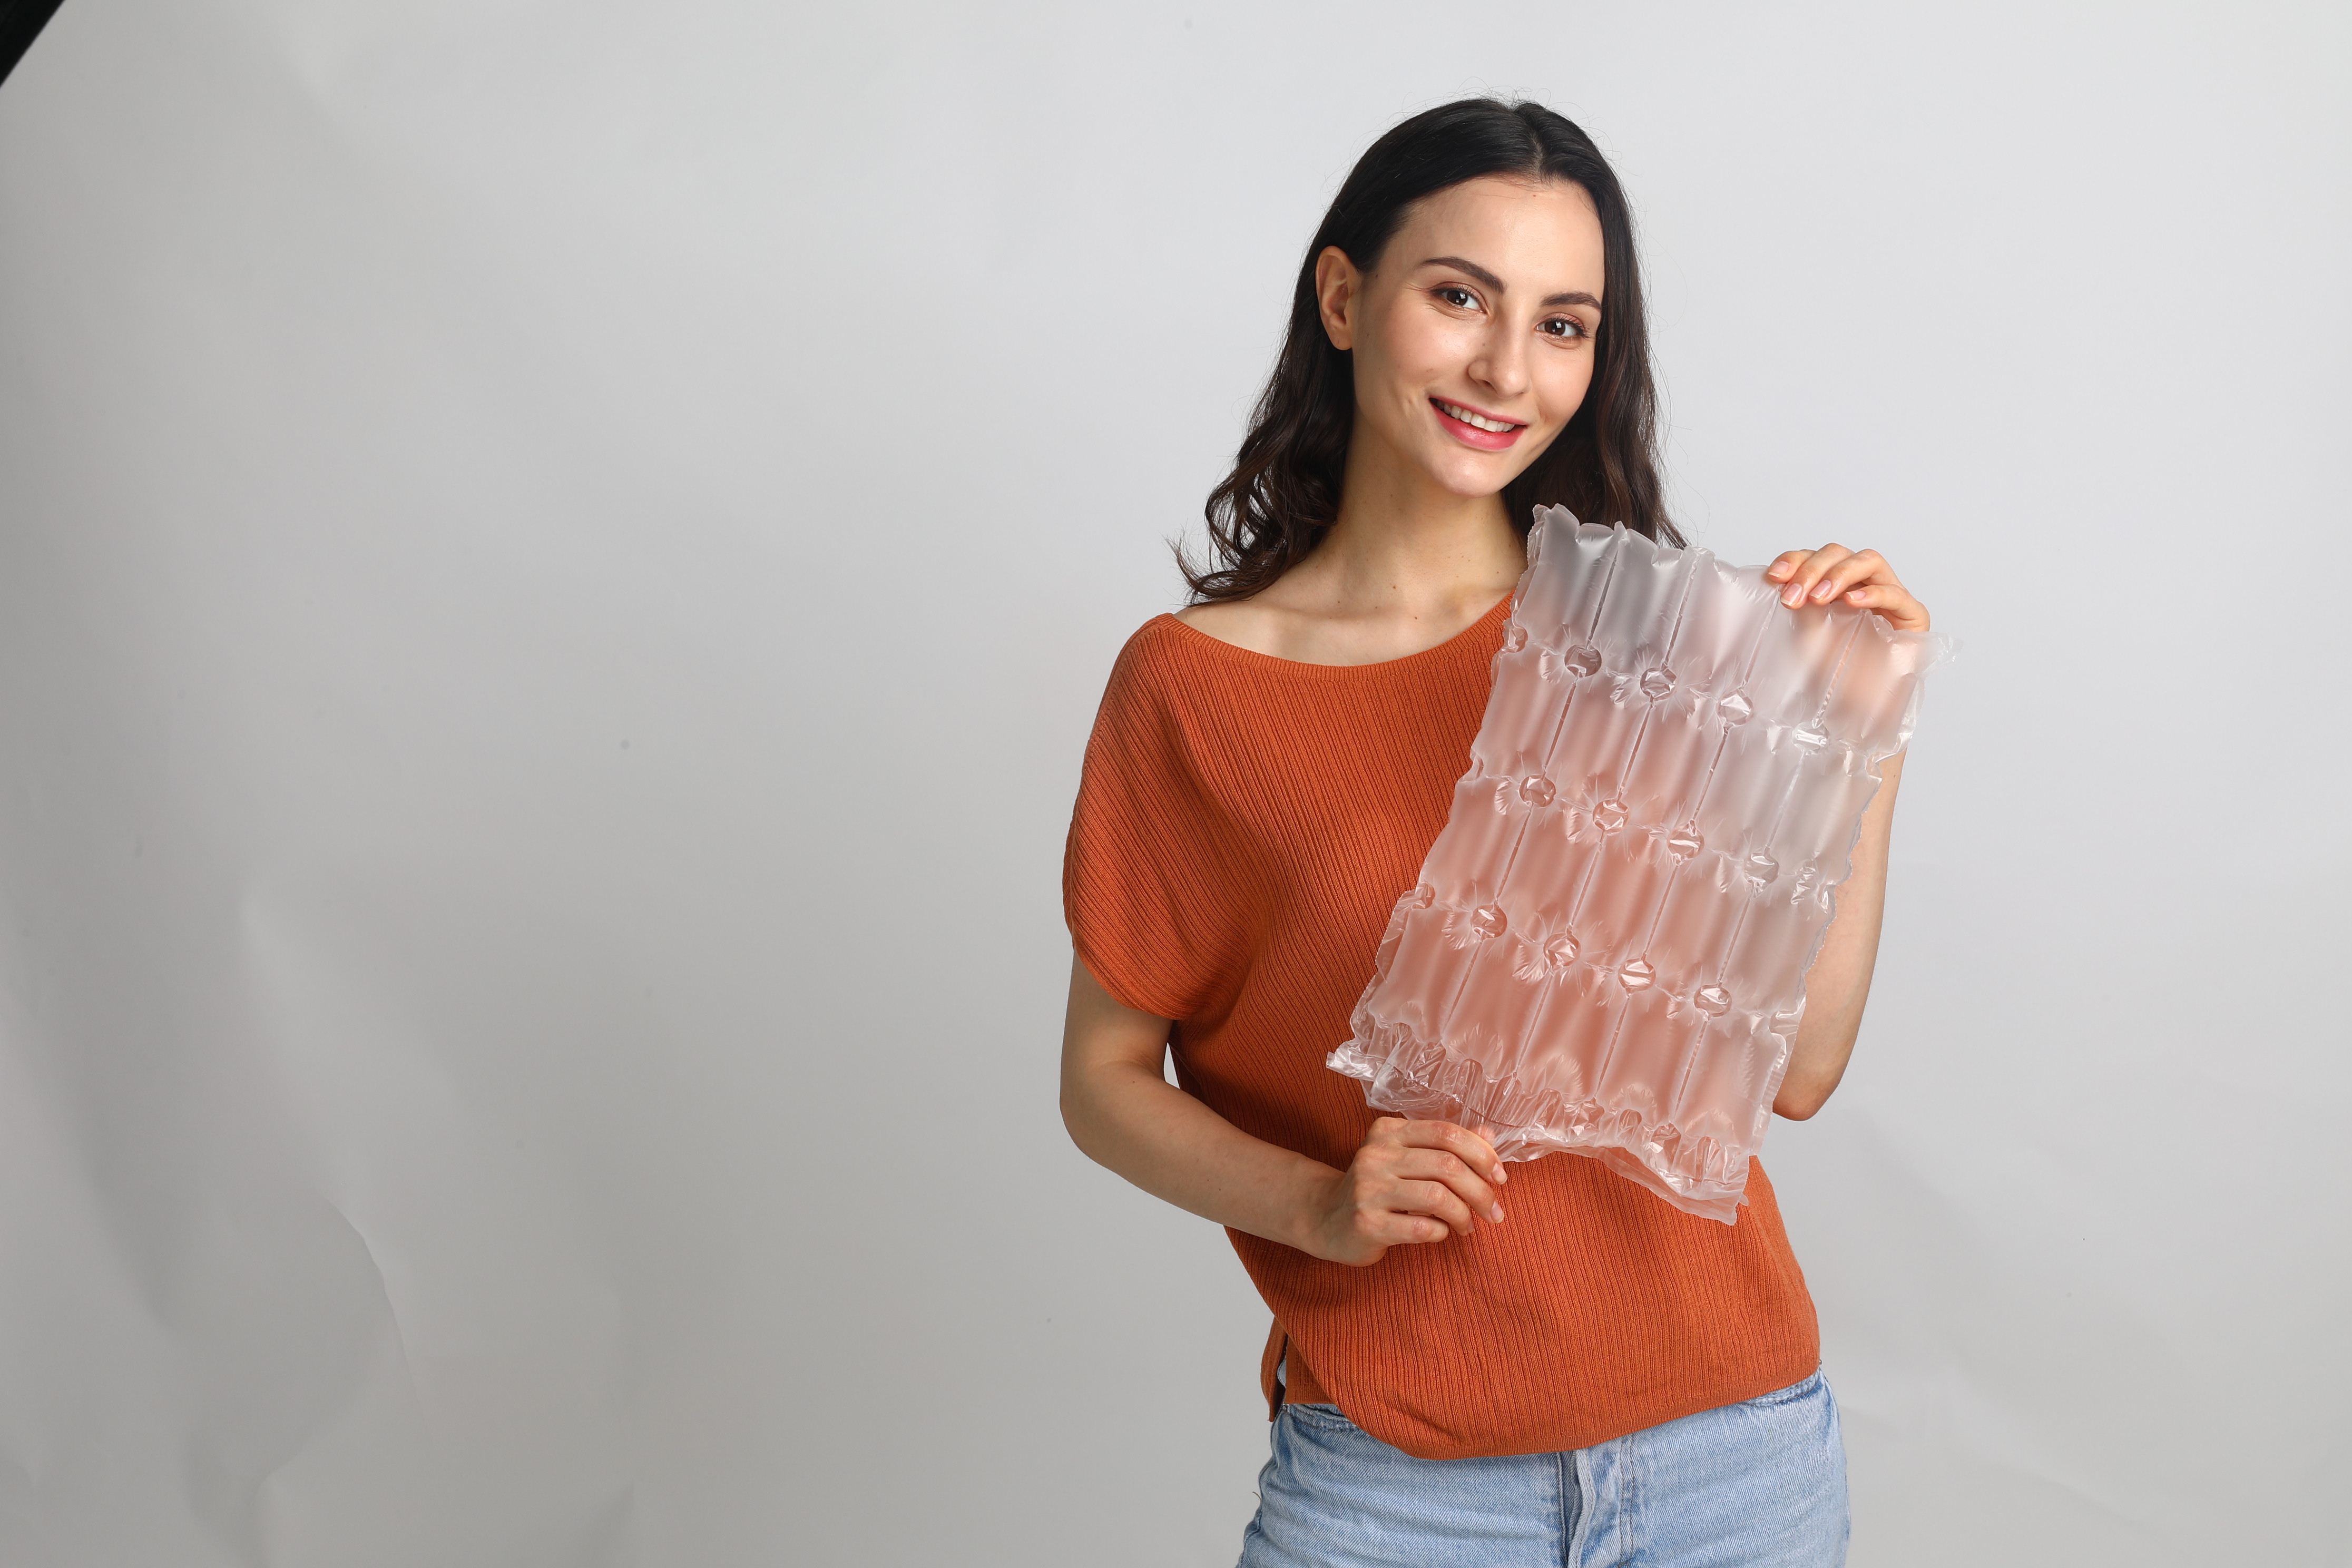 Biodegradable Poly Air Bubble Wrap Bags